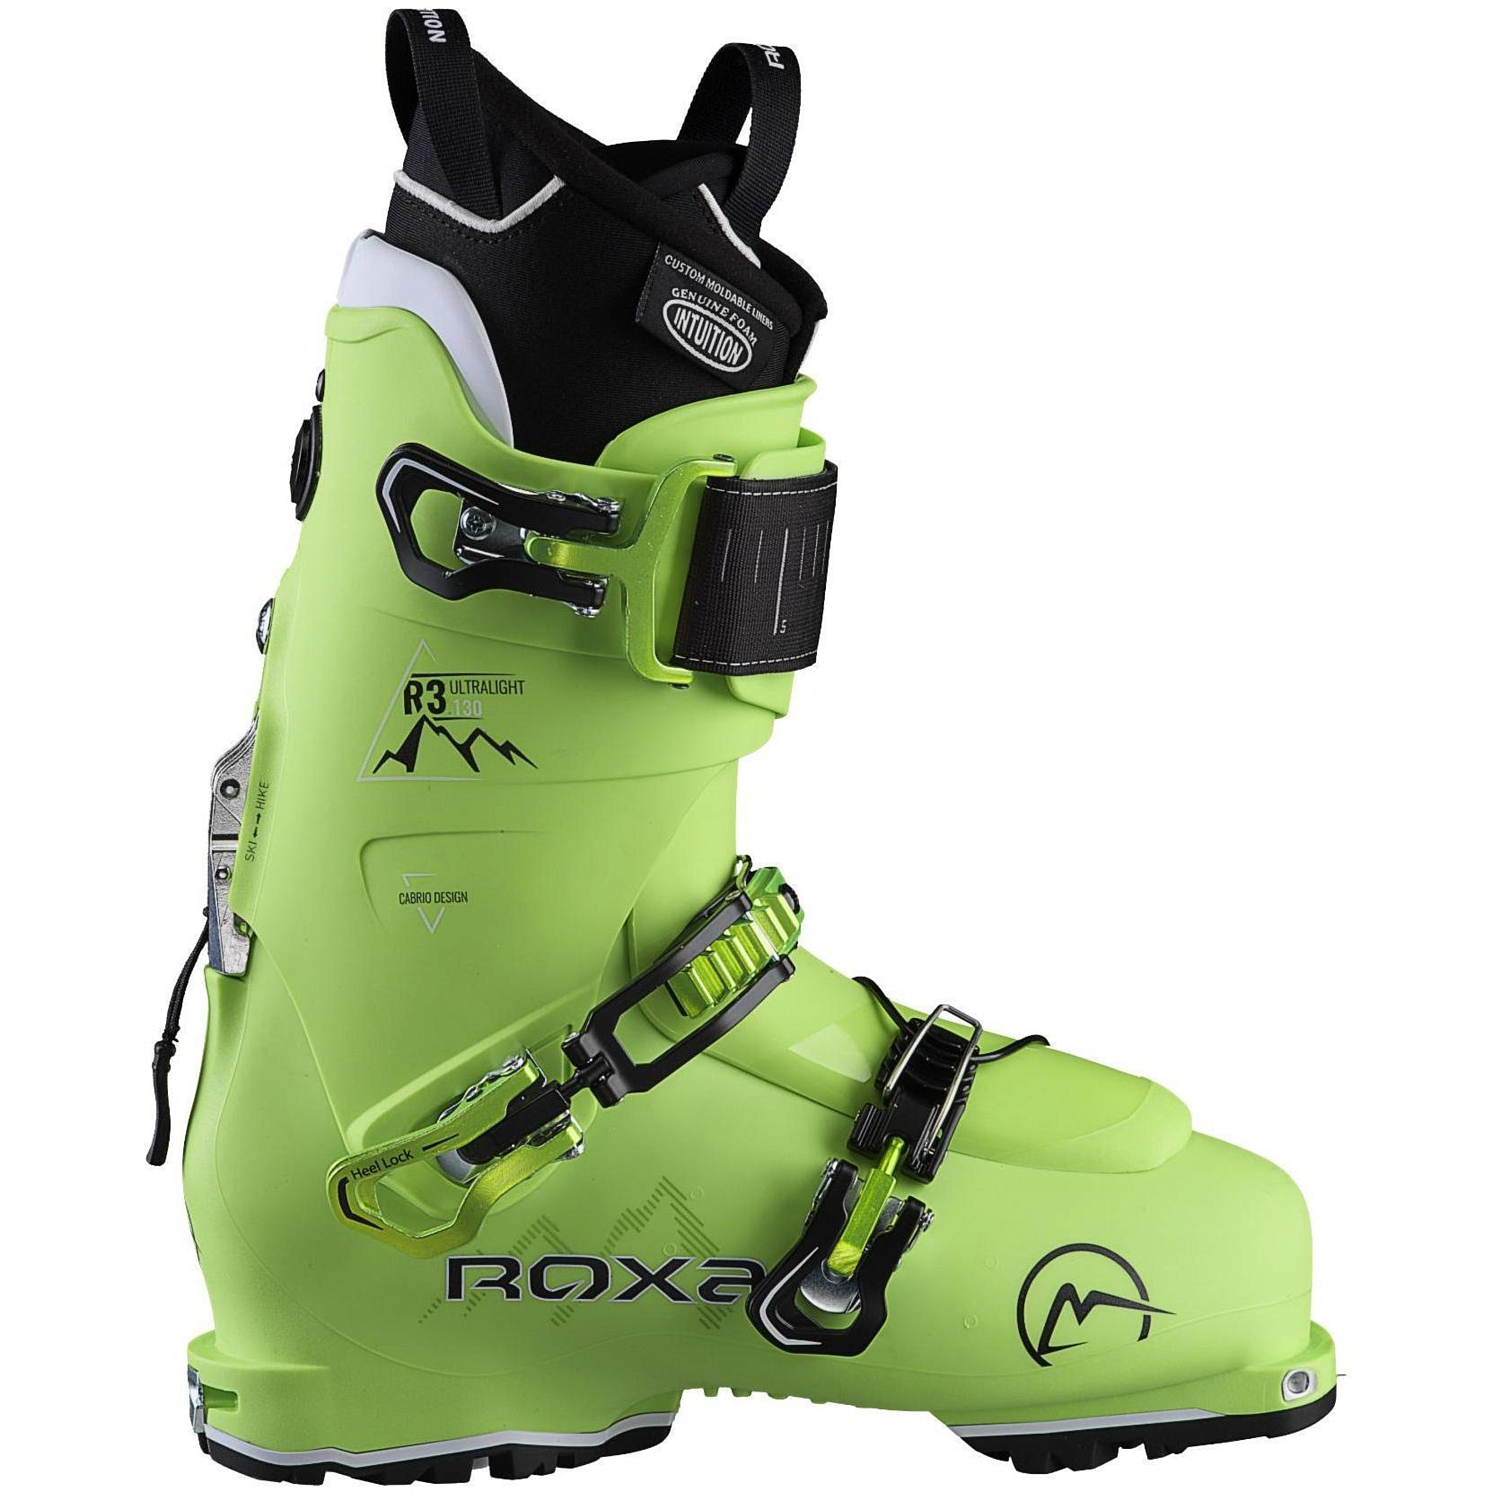 Горнолыжные ботинки ROXA R3 130 TI IR - GRIP WALK Limon/limon/limon